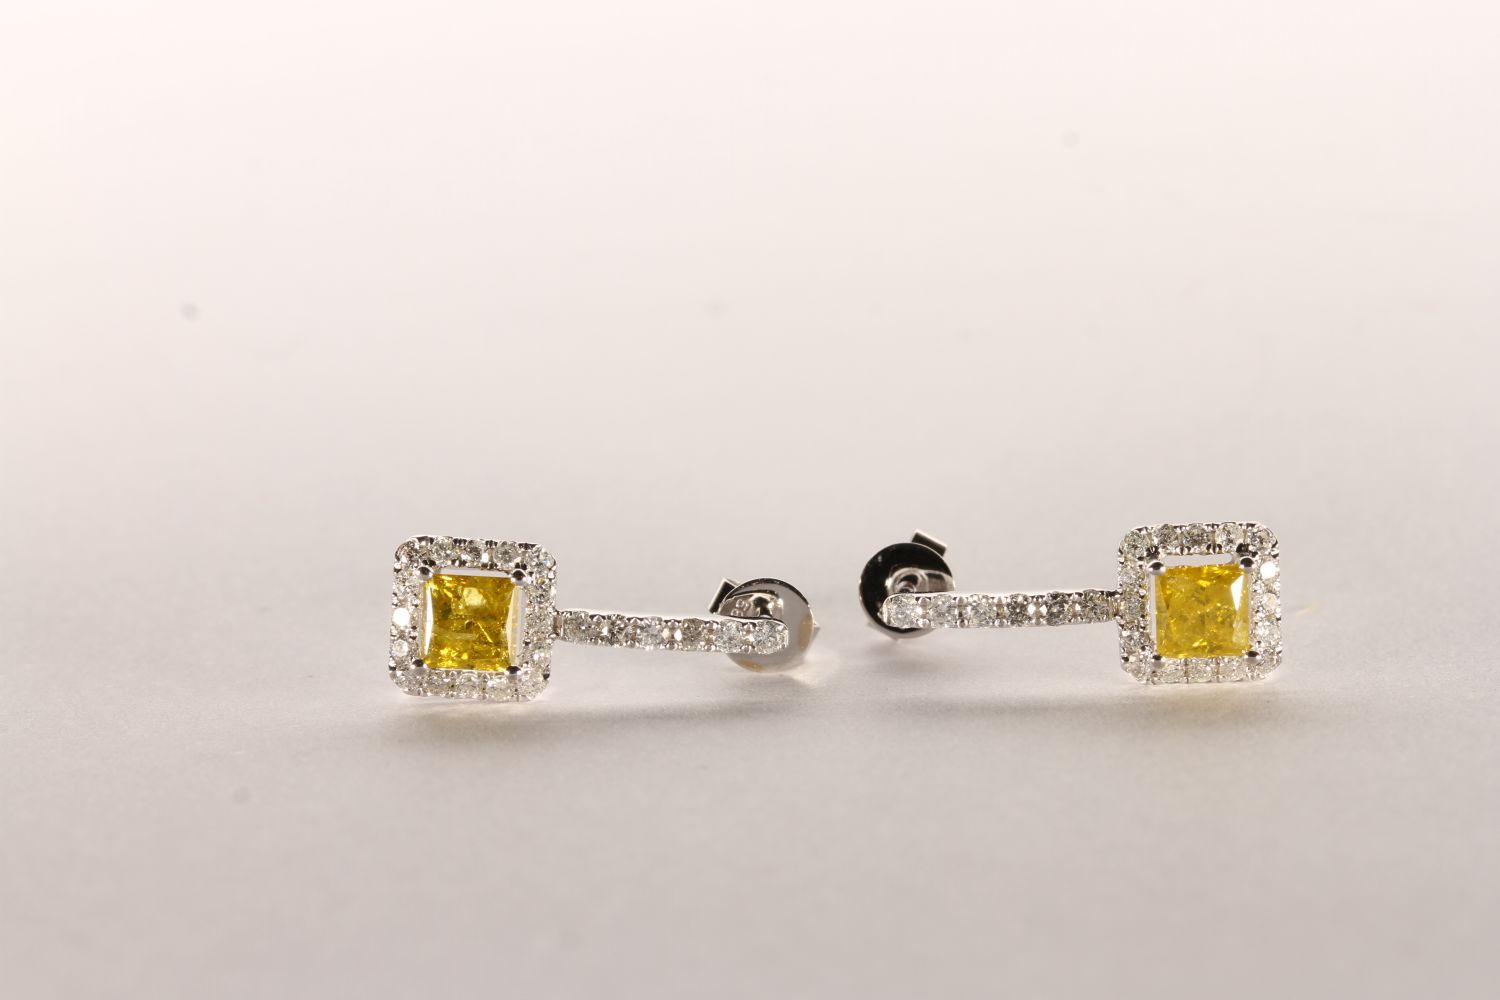 Pair of Diamond Drop Earrings set with 2 princess cut vivid yellow diamonds to the centre